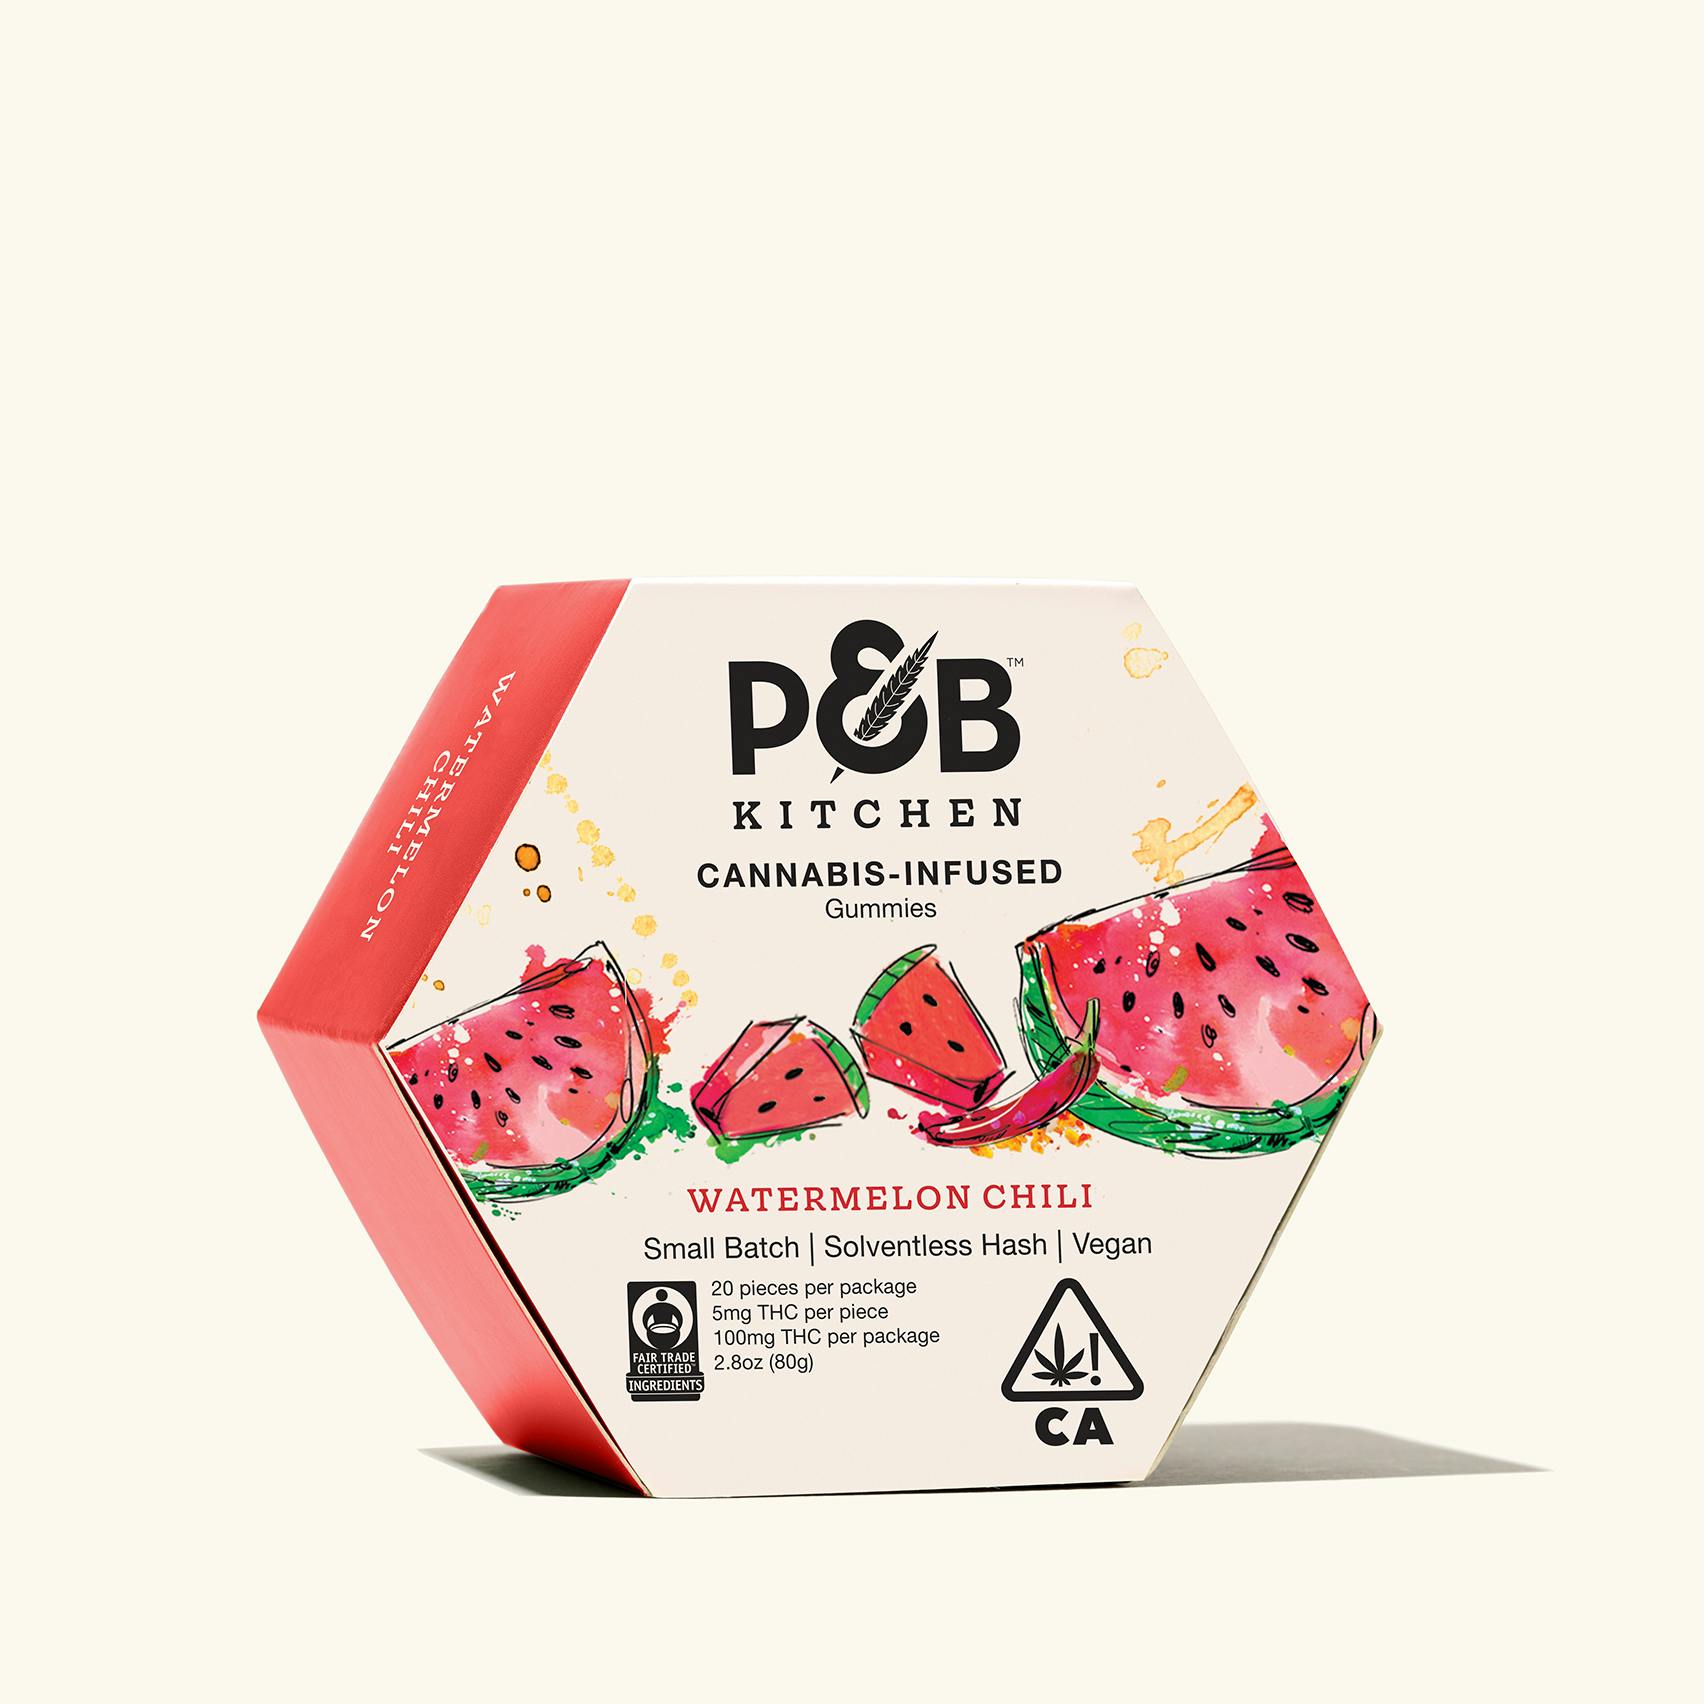 PB Kitchen Watermelon Chili Gummies Box Product Image Cream 01